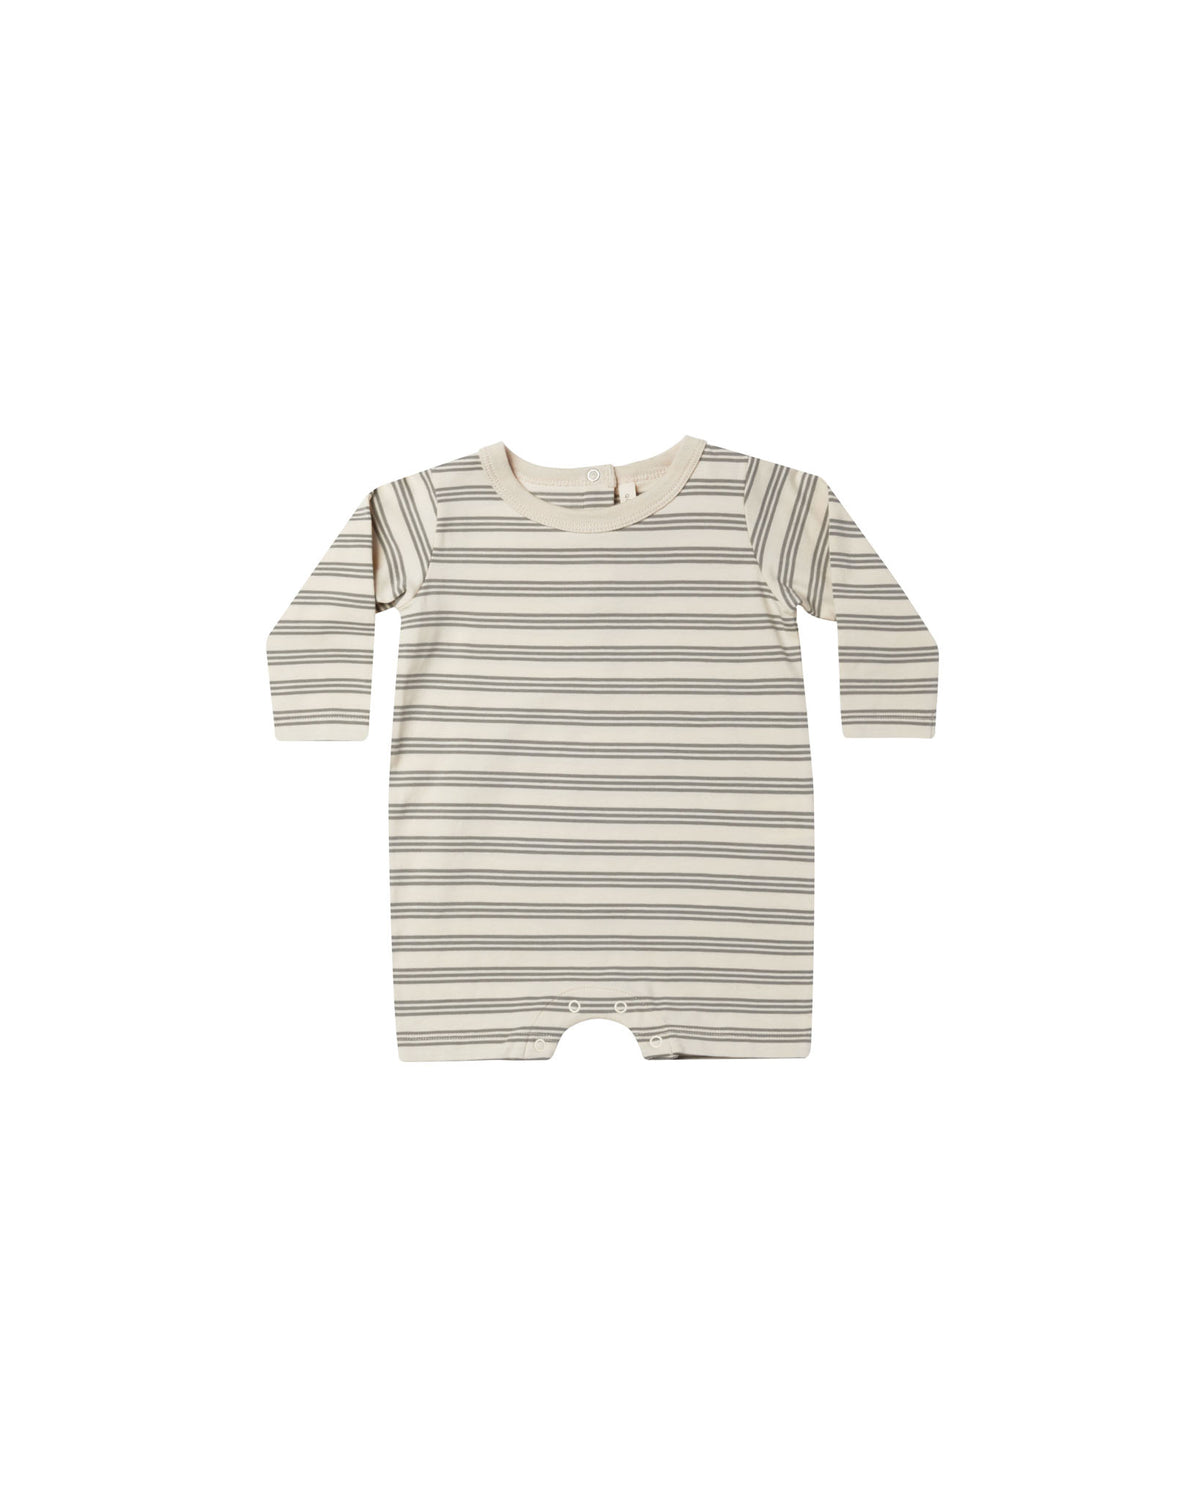 Long Sleeve Romper - Basil Stripe - Child Boutique